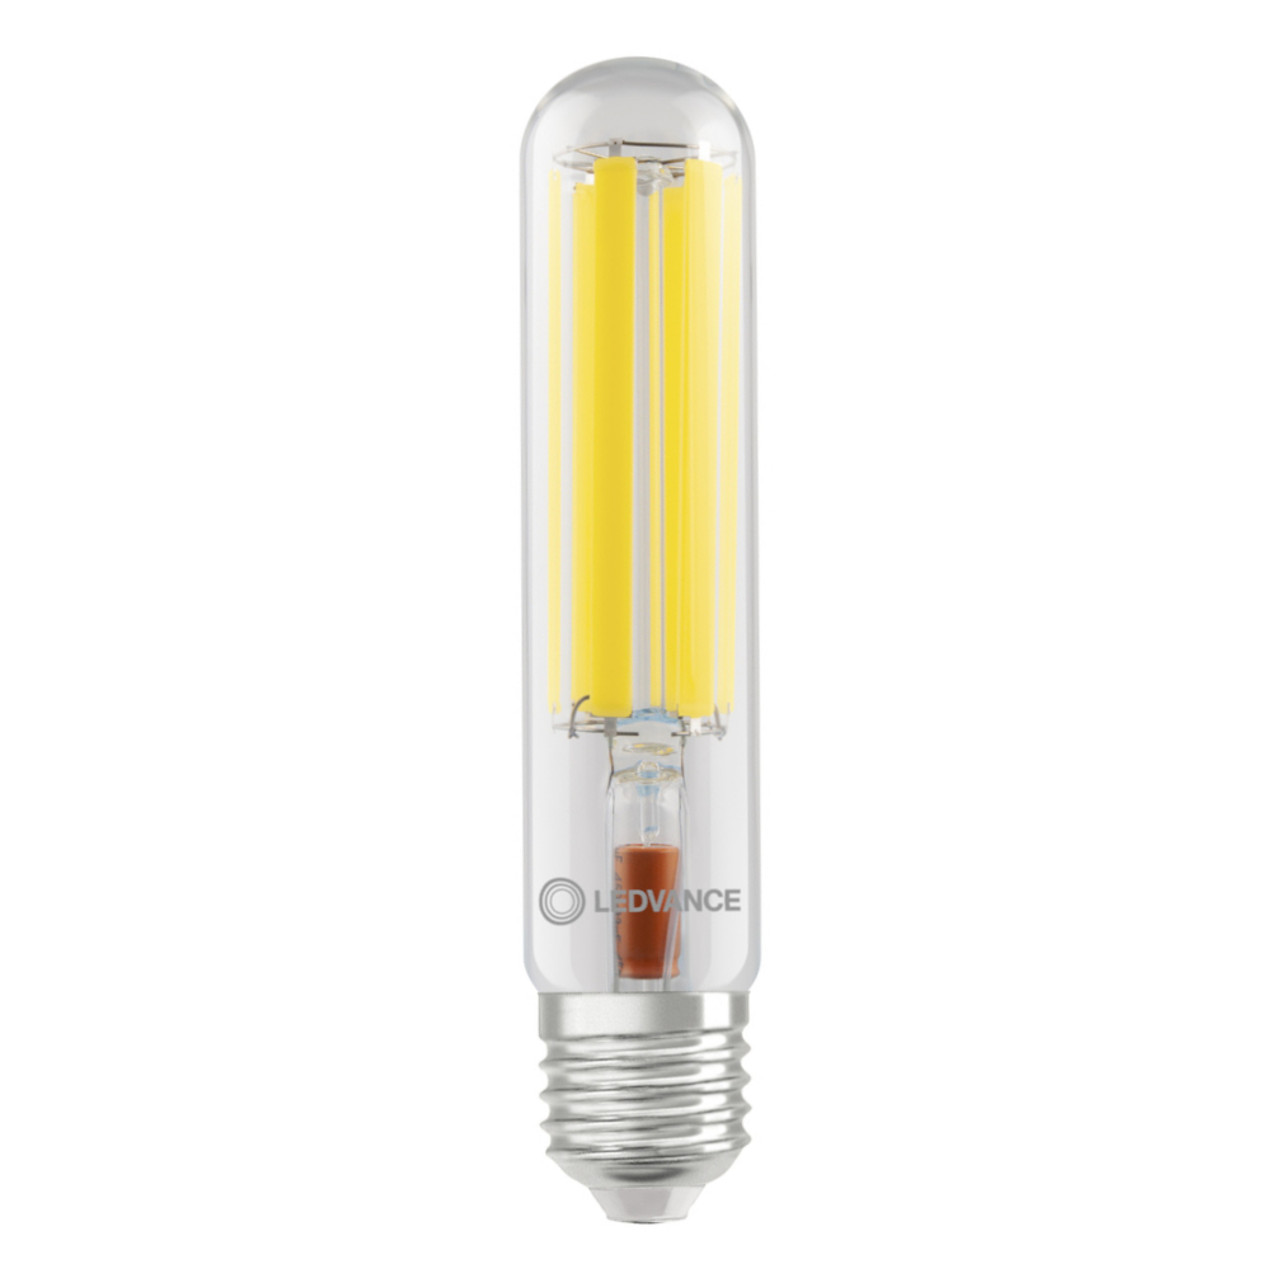 Ledvance 41W NAV LED Lamp 7000lm ES 727 Very Warm White